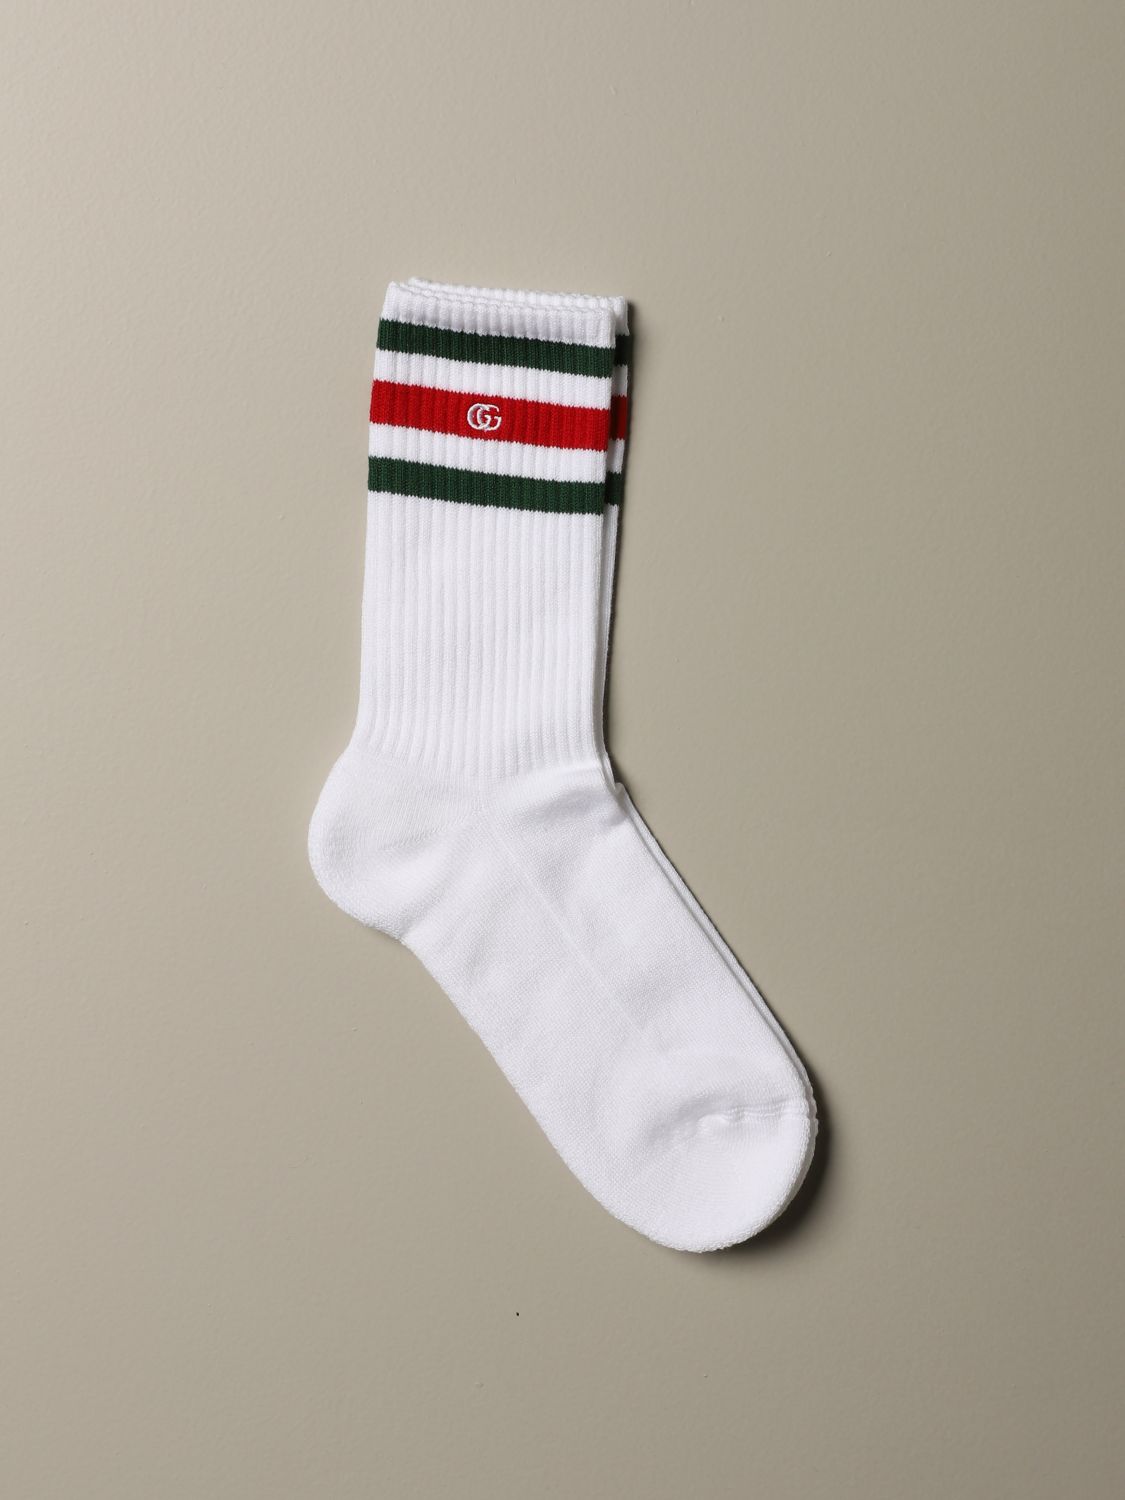 GUCCI: stretch cotton socks - White | Gucci socks 459532 4K667 online on  